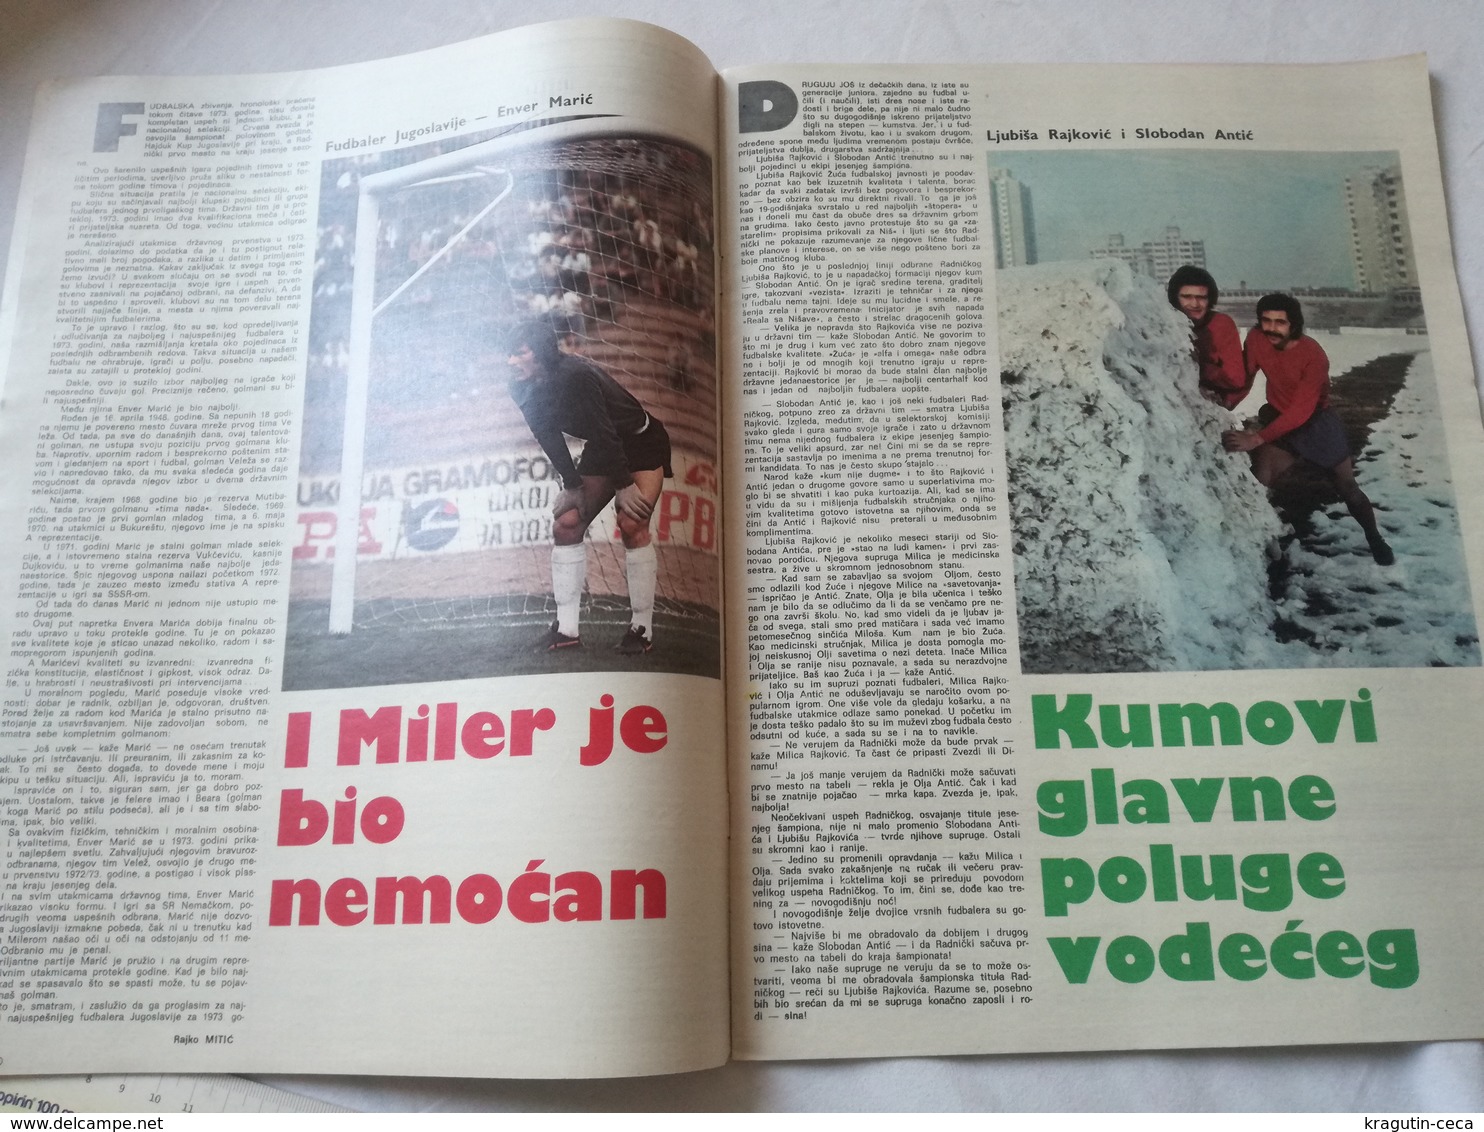 1974 TEMPO YUGOSLAVIA SERBIA SPORT FOOTBALL MAGAZINE NEWSPAPERS WM74 CHAMPIONSHIPS WOMAN HANDBALL Anatoly Karpov CHESS